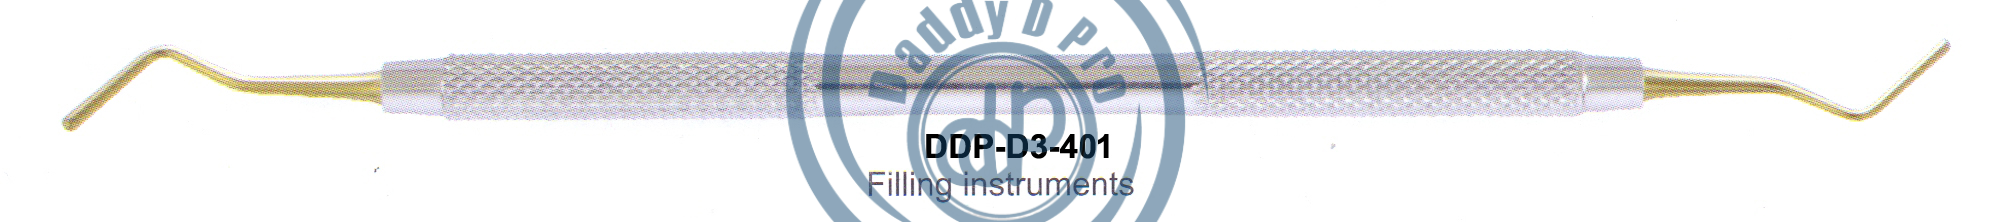 images/DDP-D3-401.png